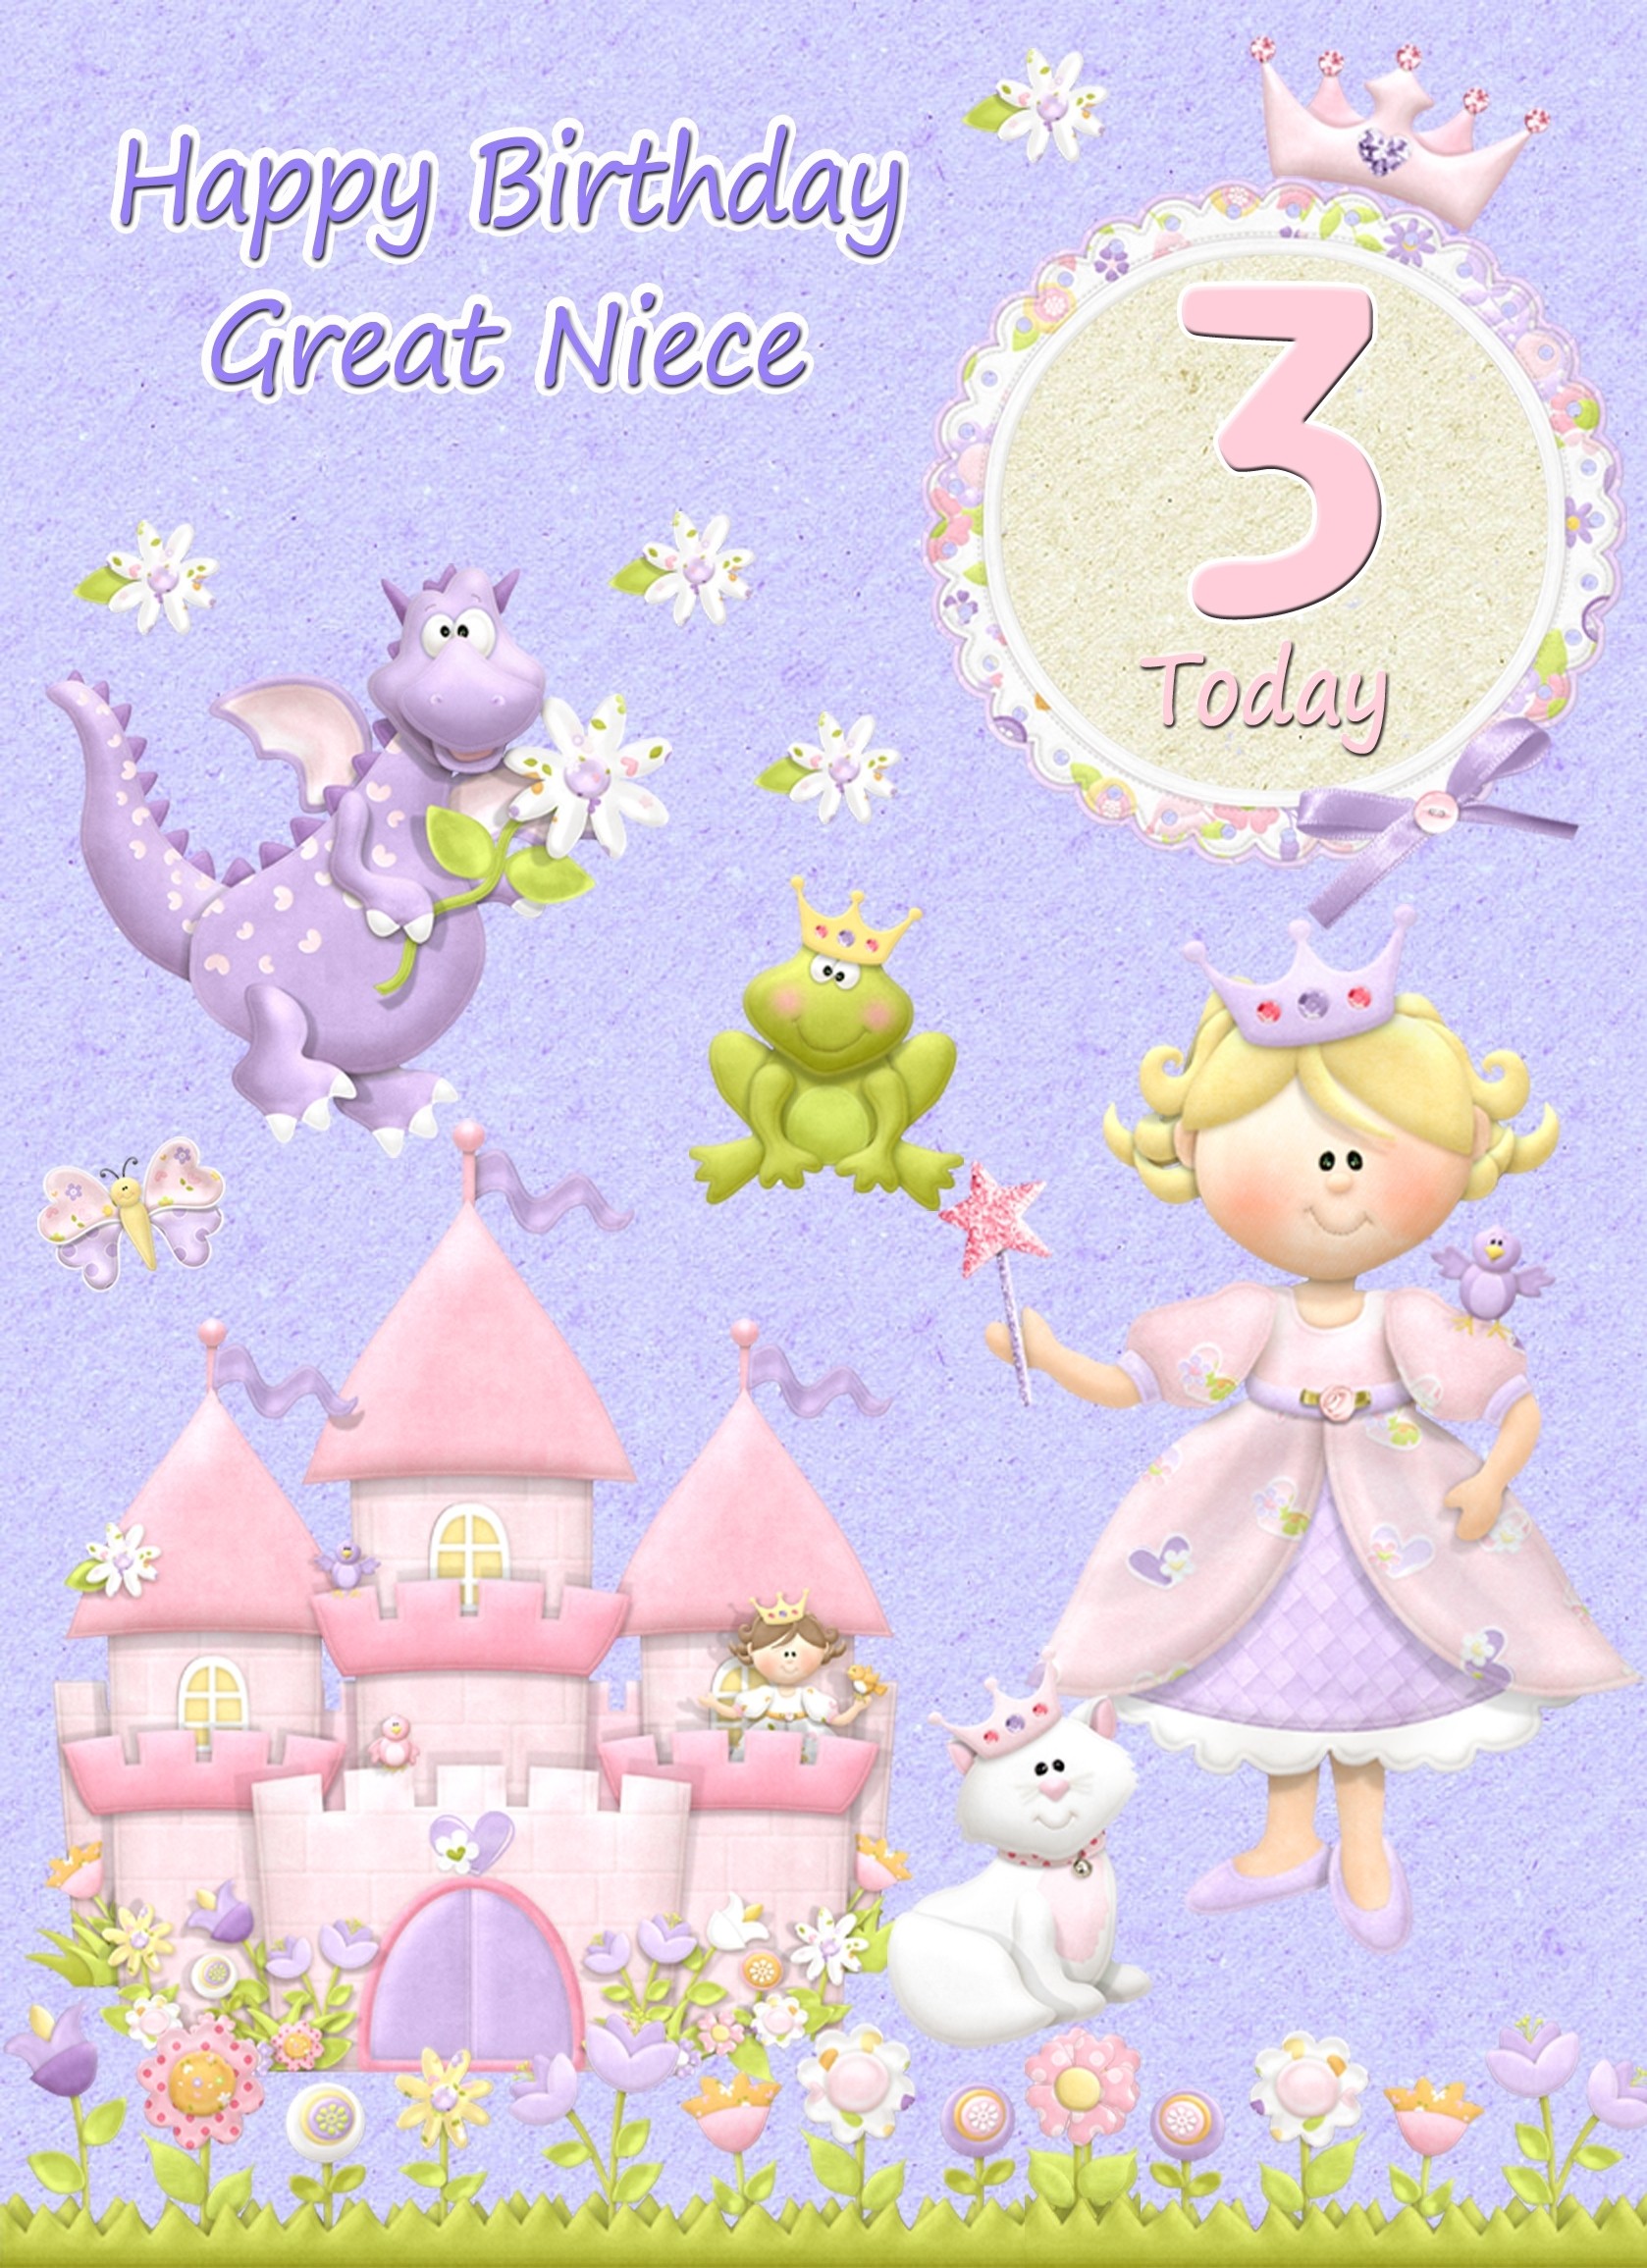 Kids 3rd Birthday Princess Cartoon Card for Great Niece